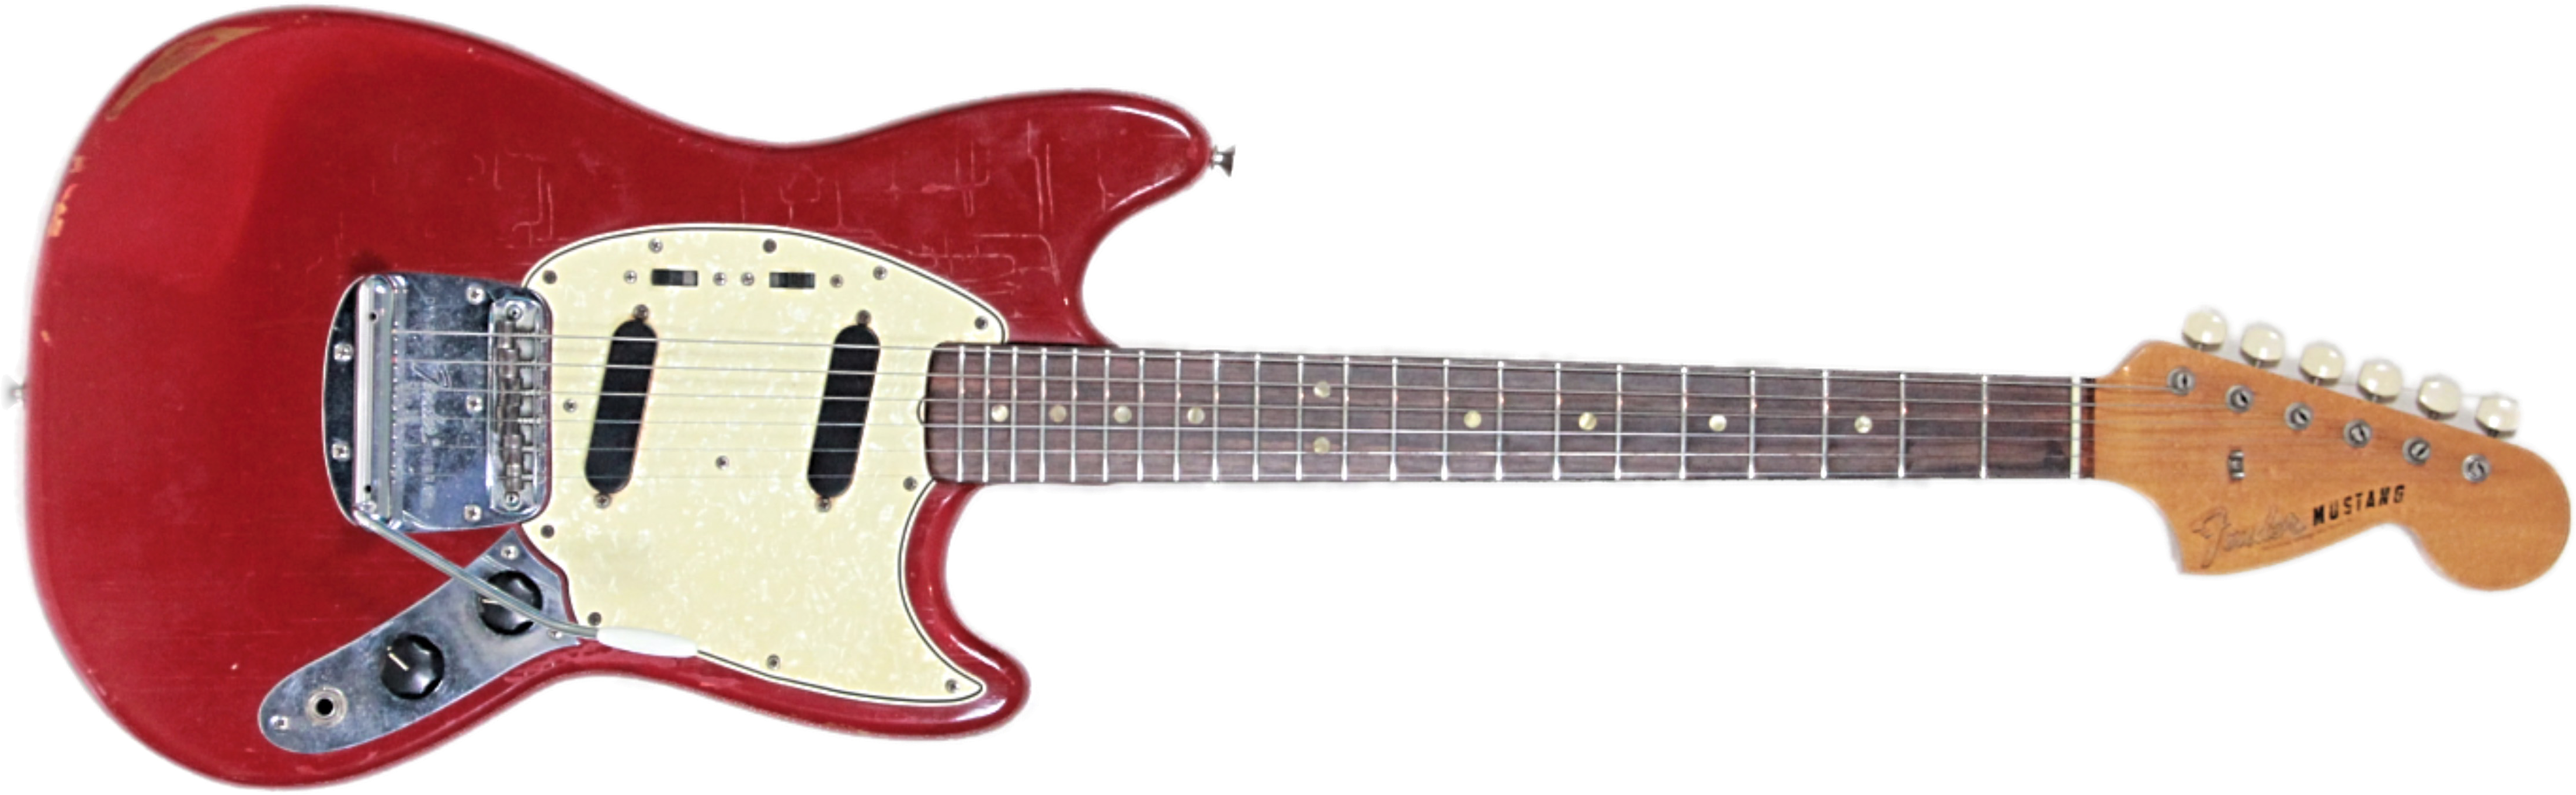 1966 Fender Mustang - Mustang Cyclone Body (4850x1876), Png Download